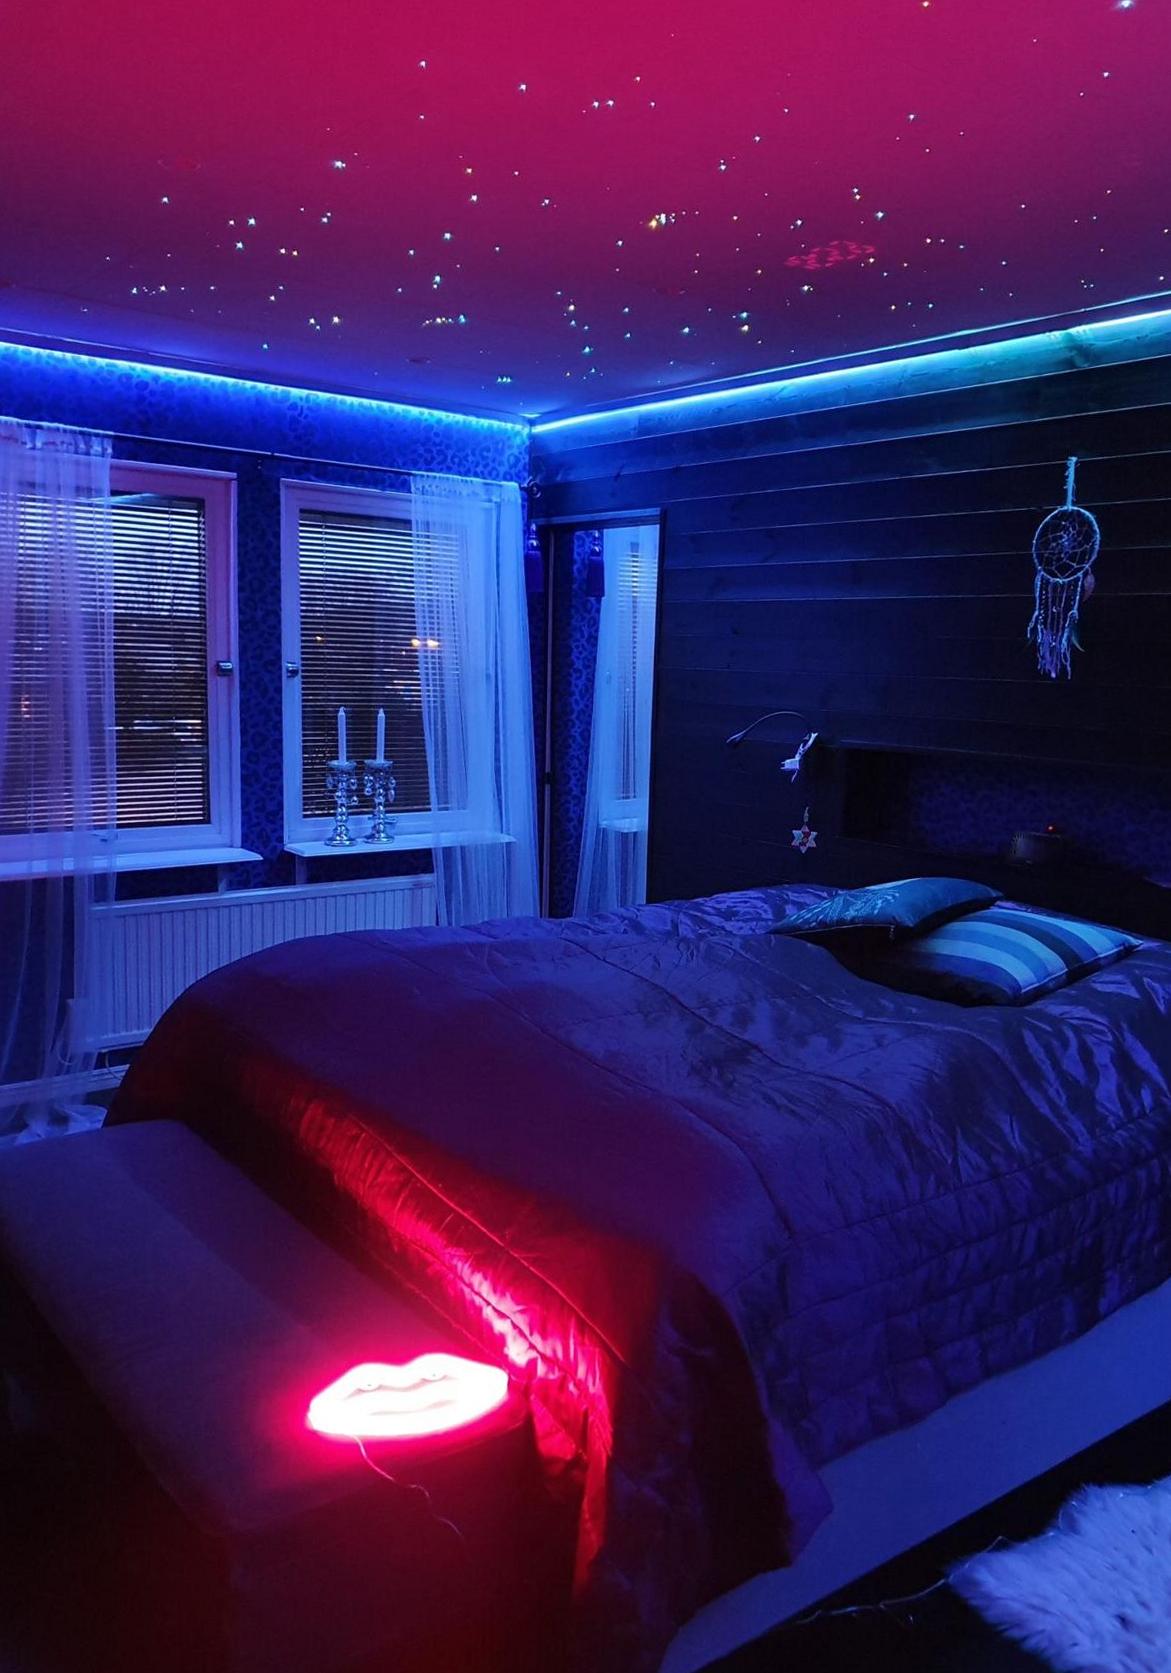 Bedroom Light Decor: Illuminating The Room With Style